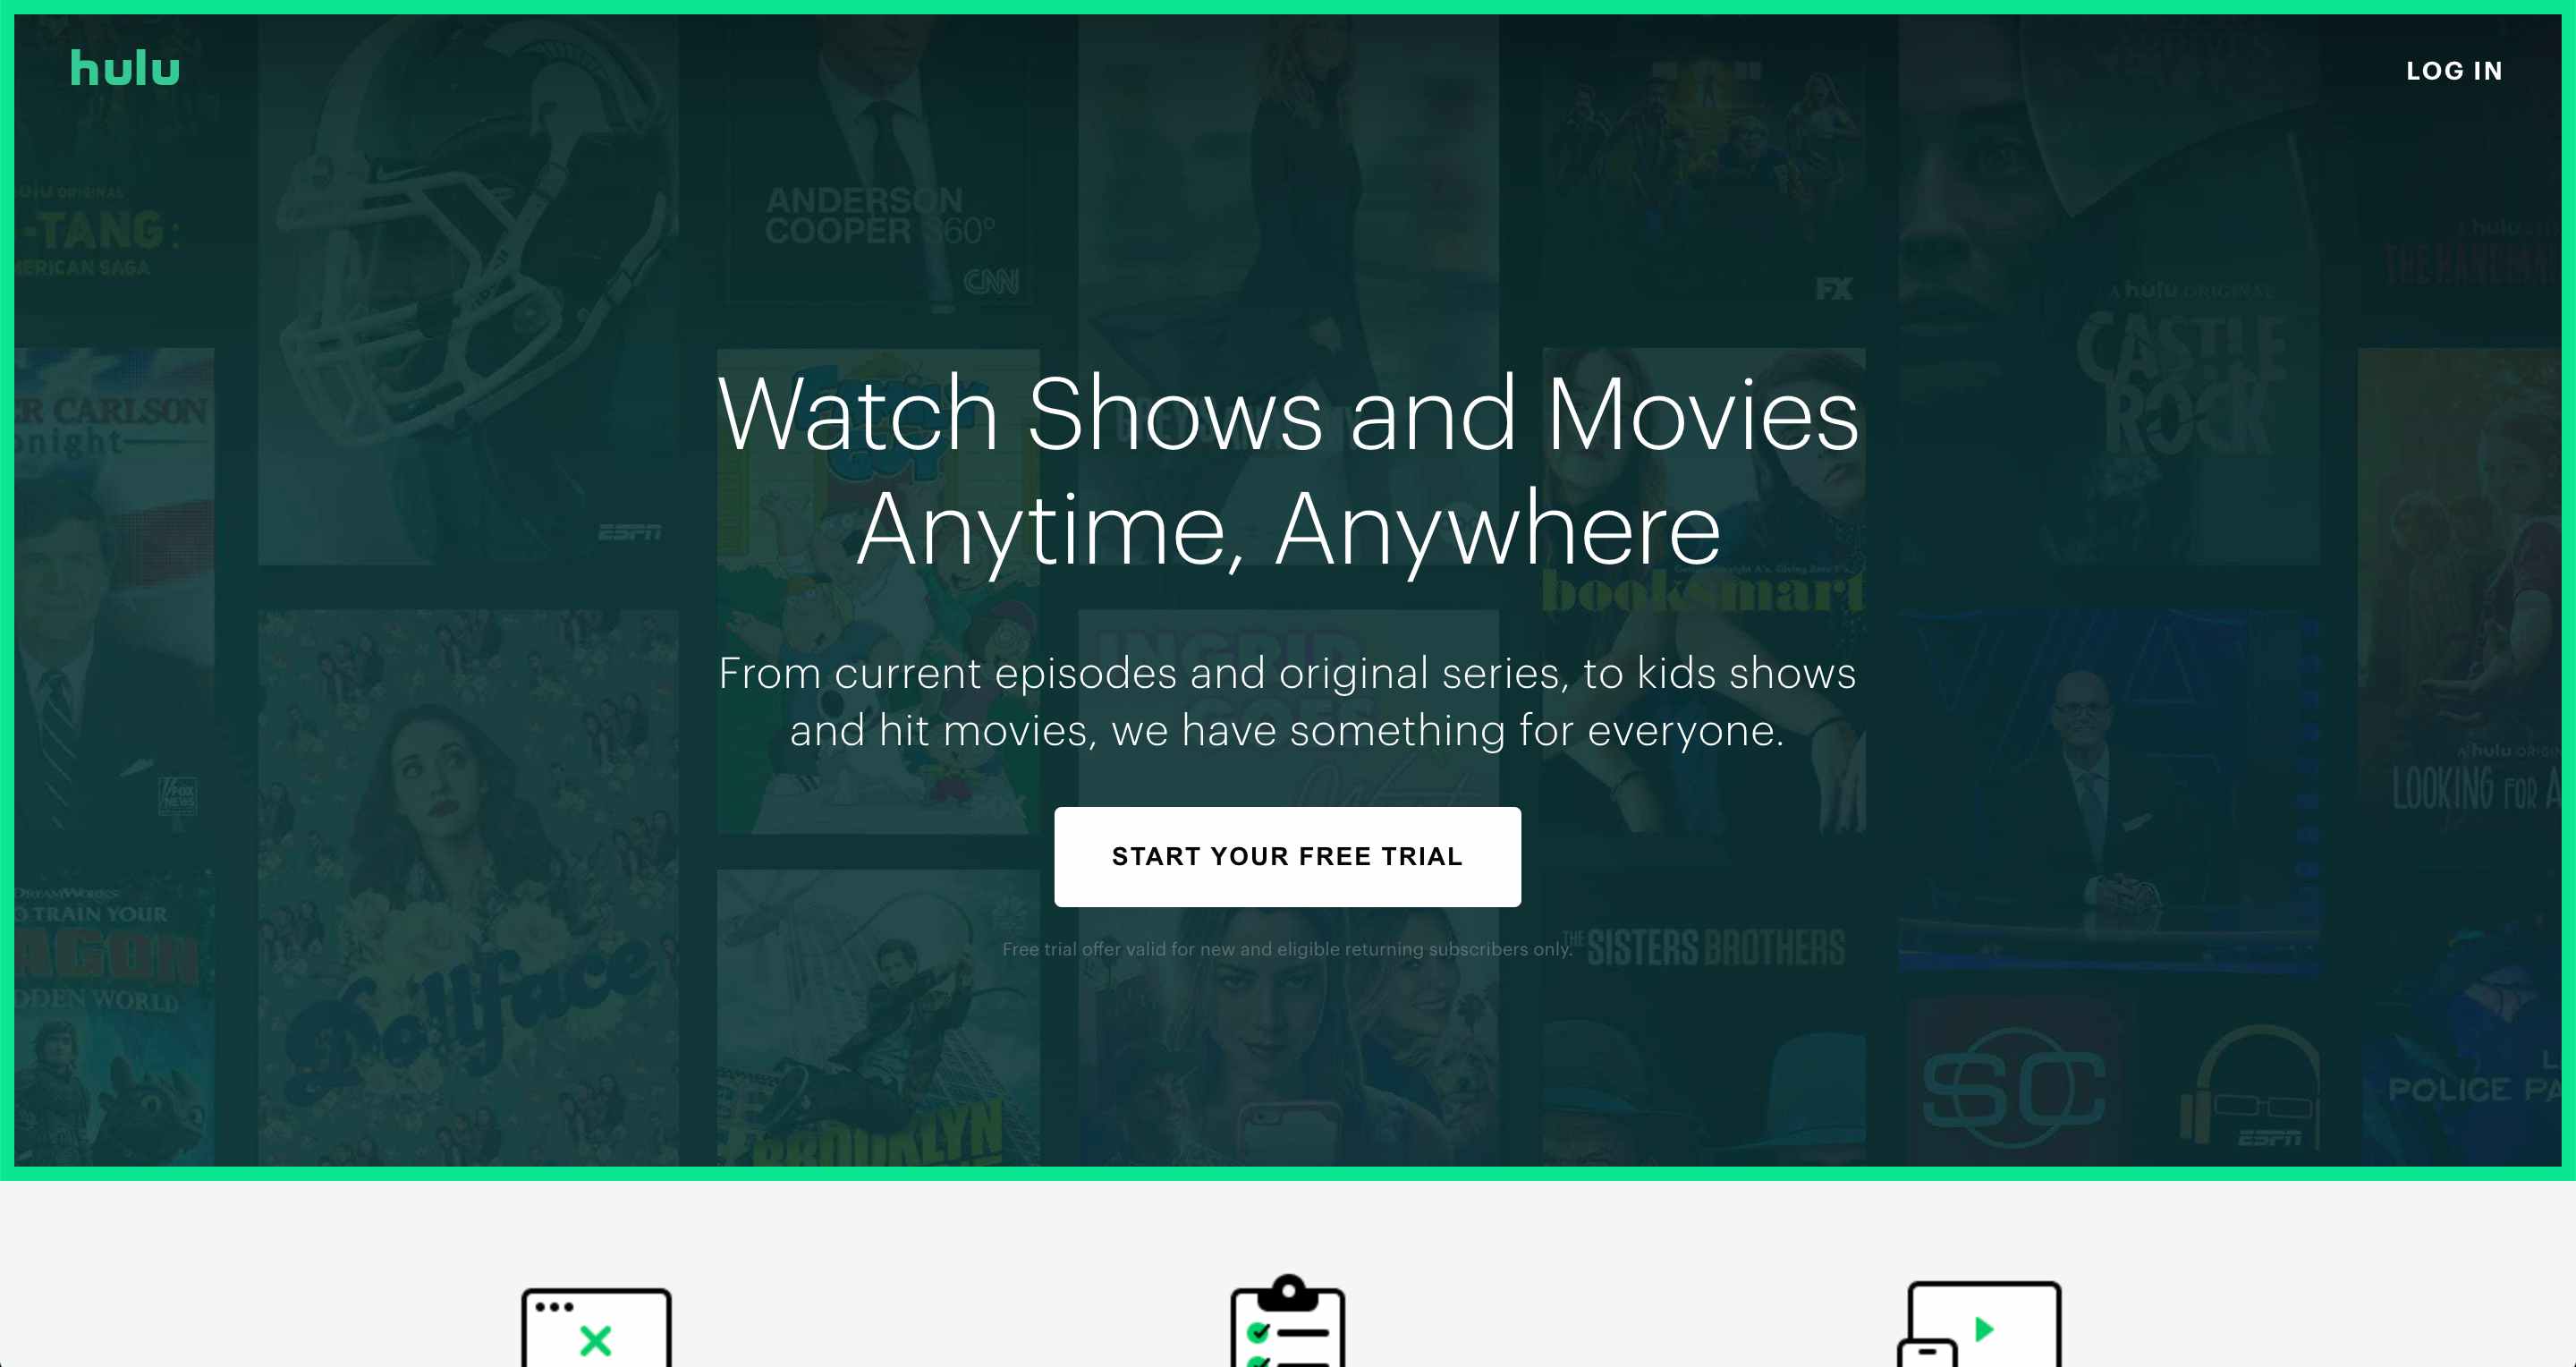 Hulu free trial page